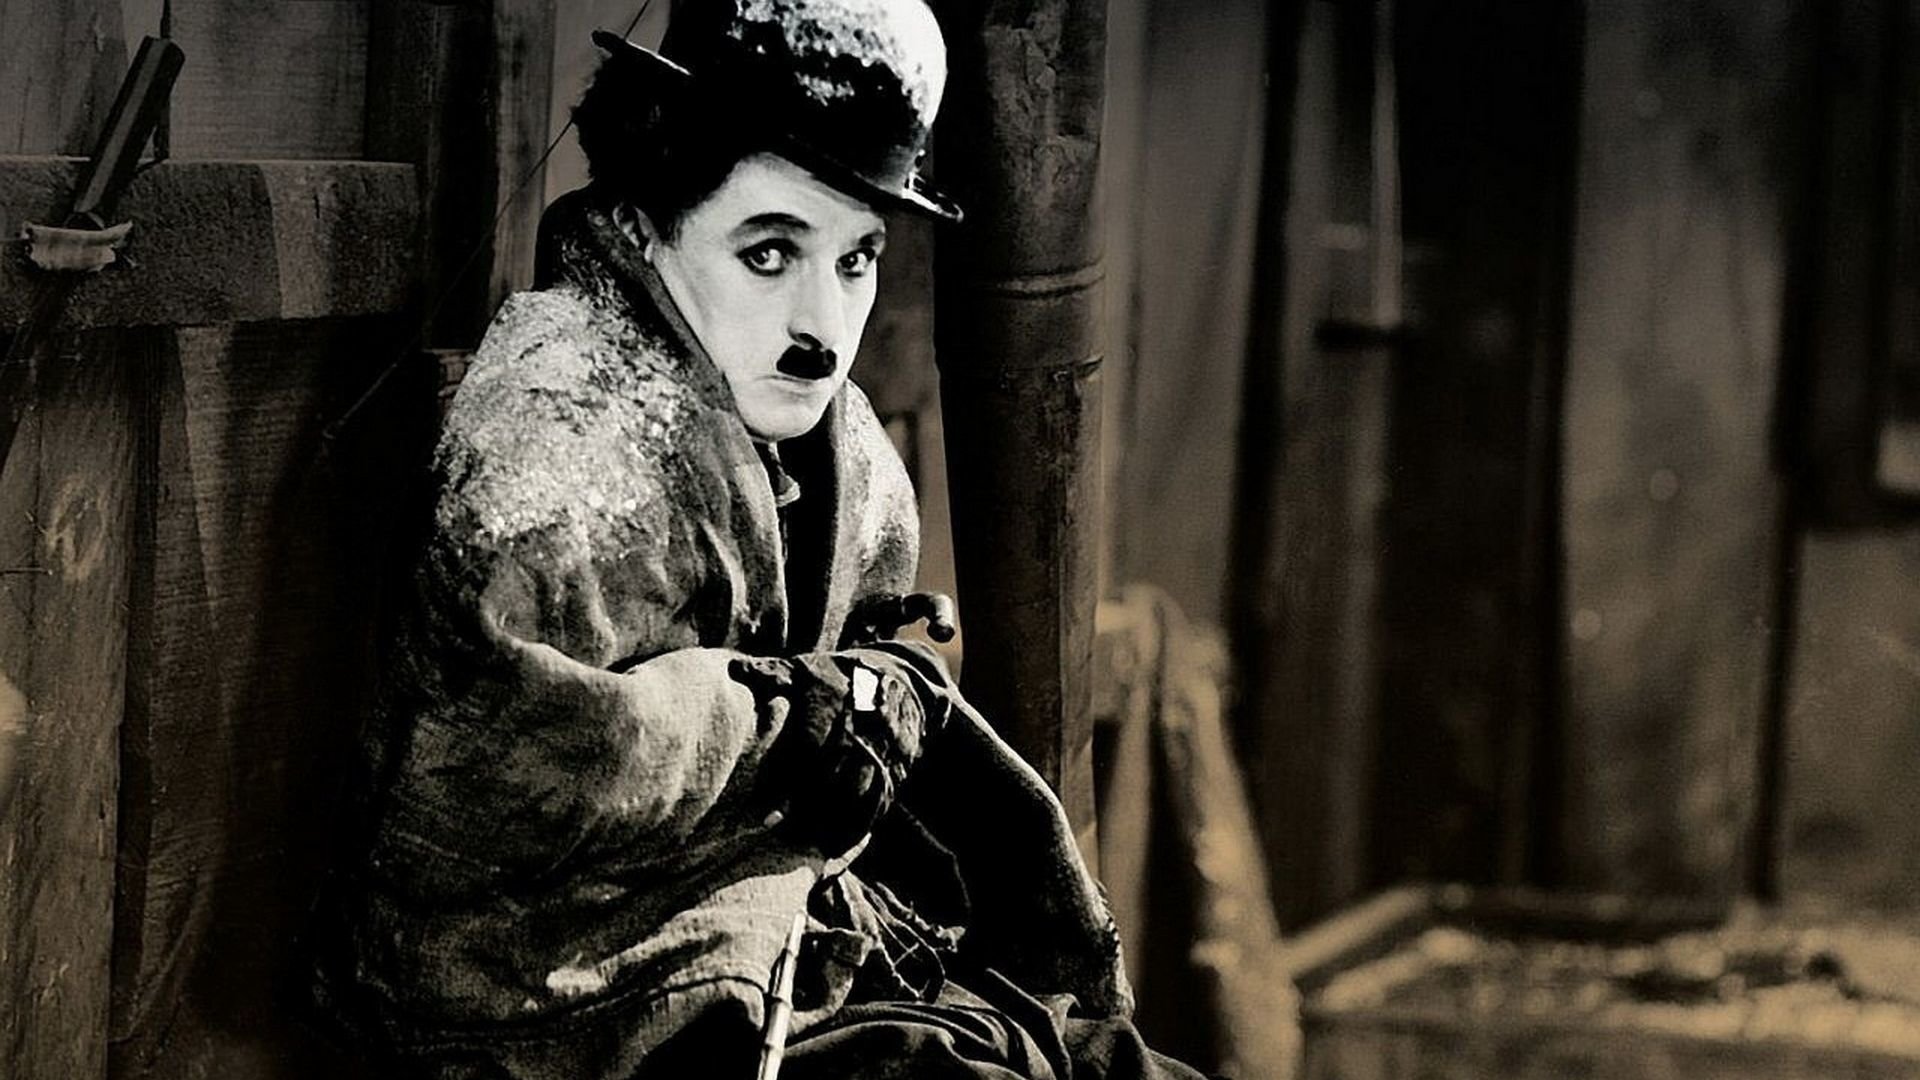 Charlie Chaplin wallpapers HD for desktop backgrounds